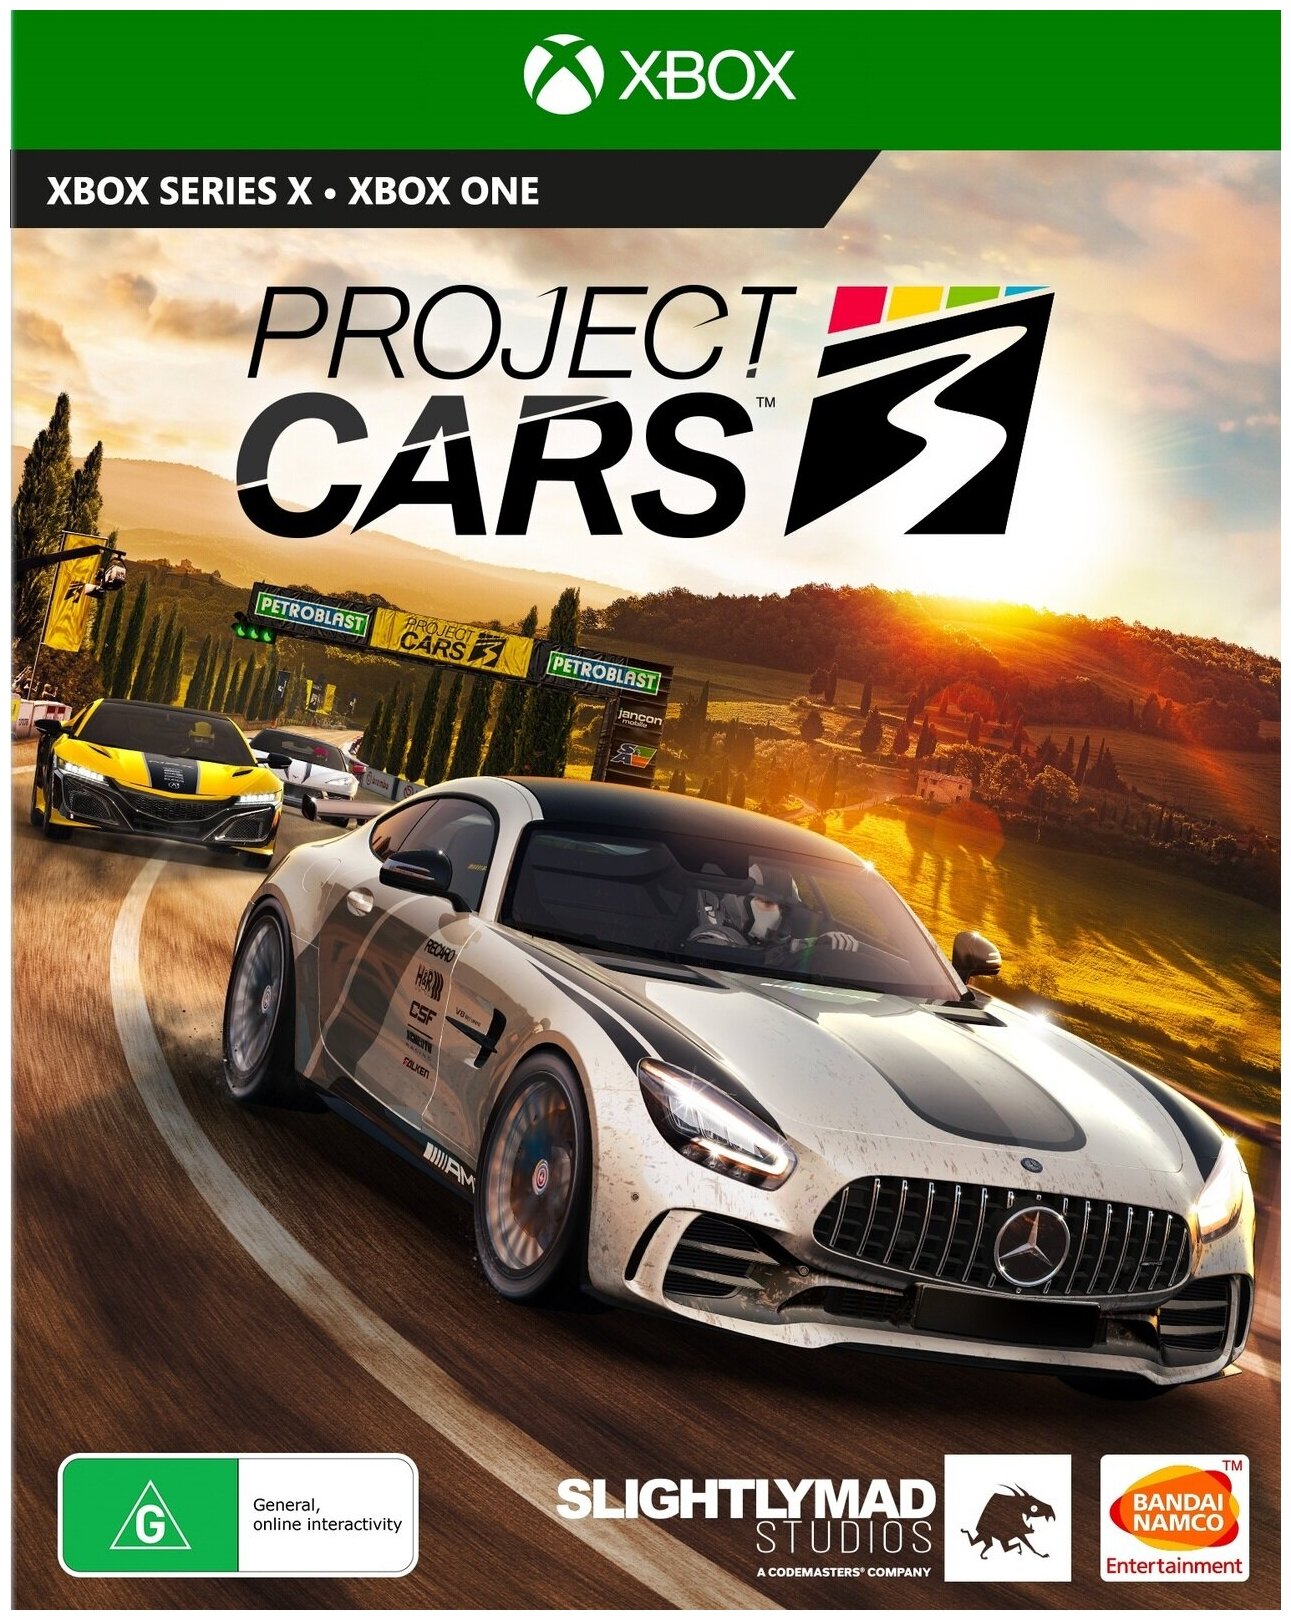 Project Cars 3 (русская версия) (Xbox One)